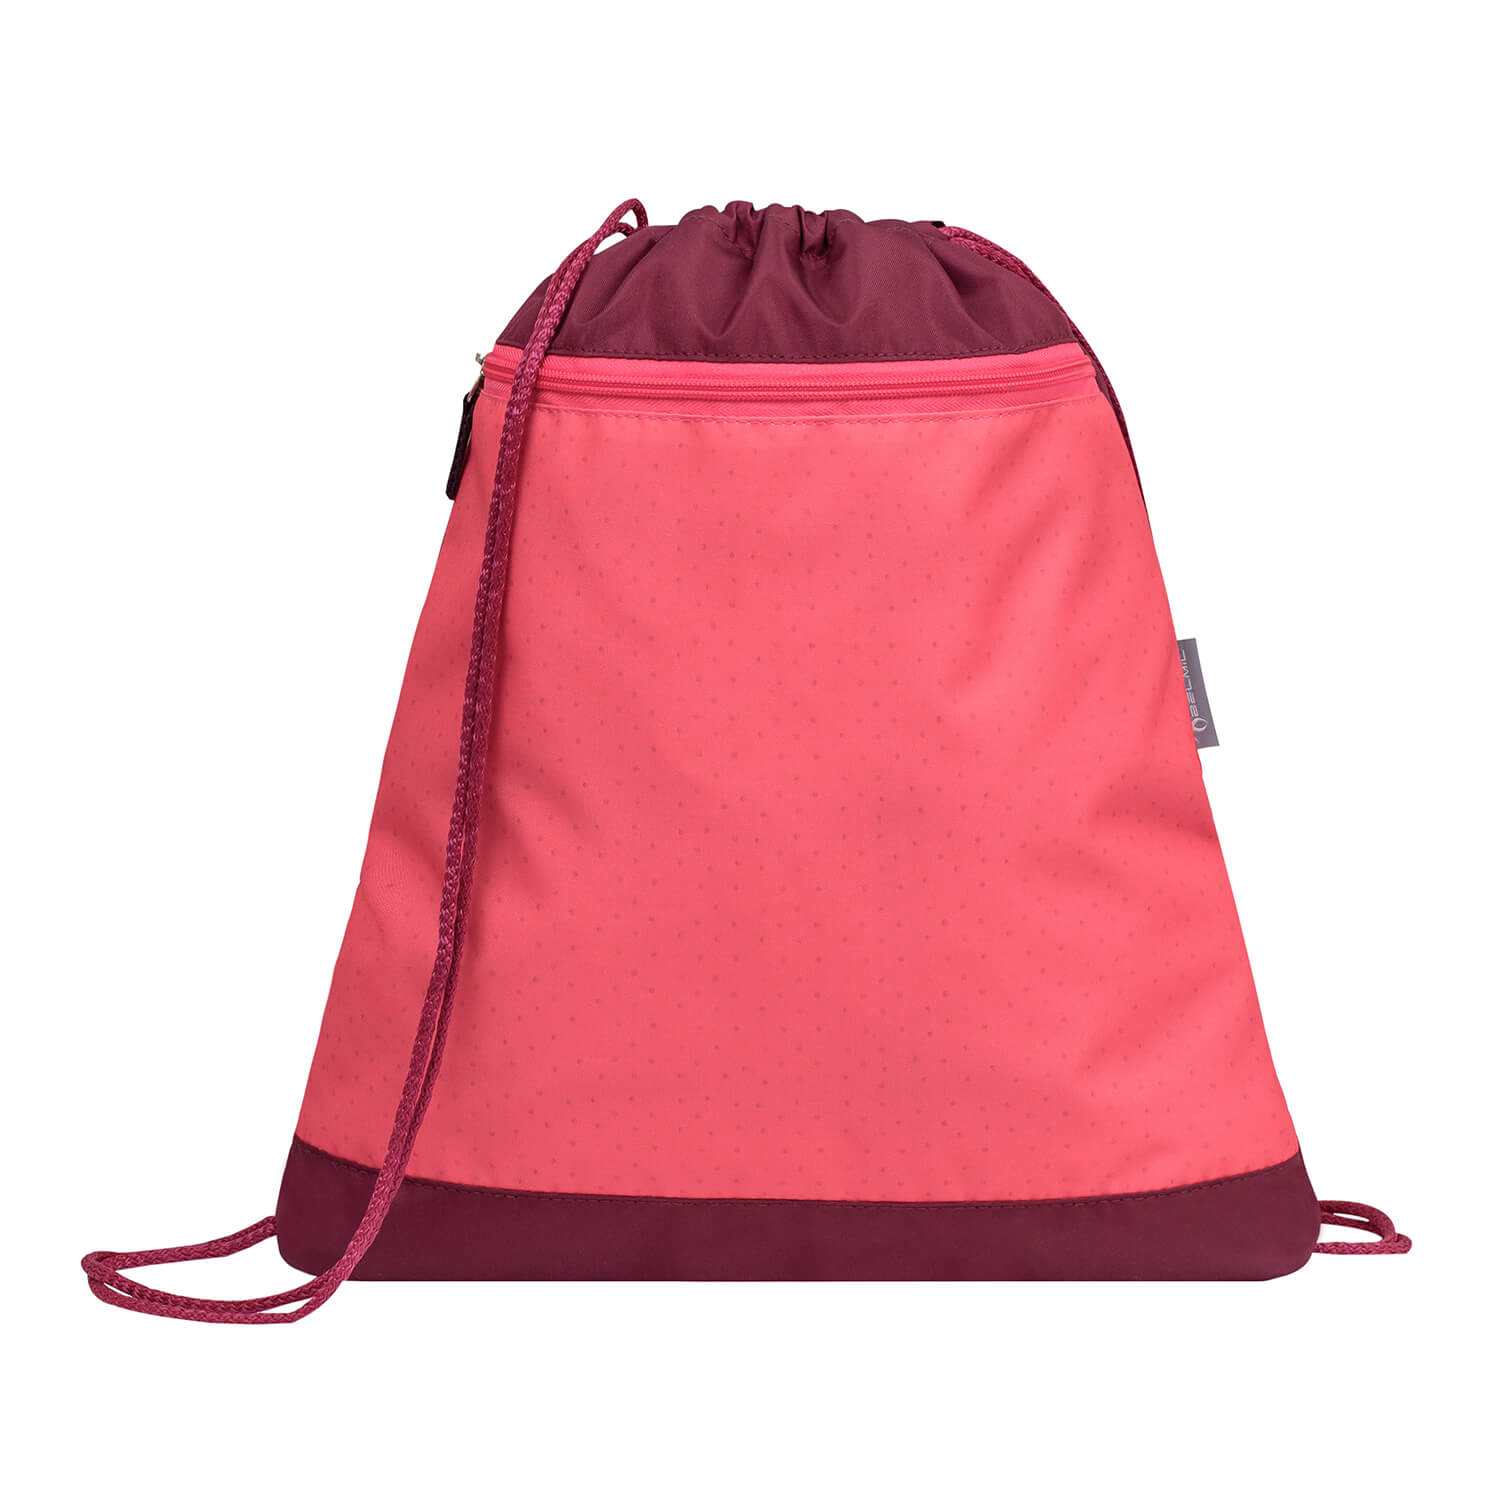 Smarty Sweet Candy schoolbag set 5 pcs